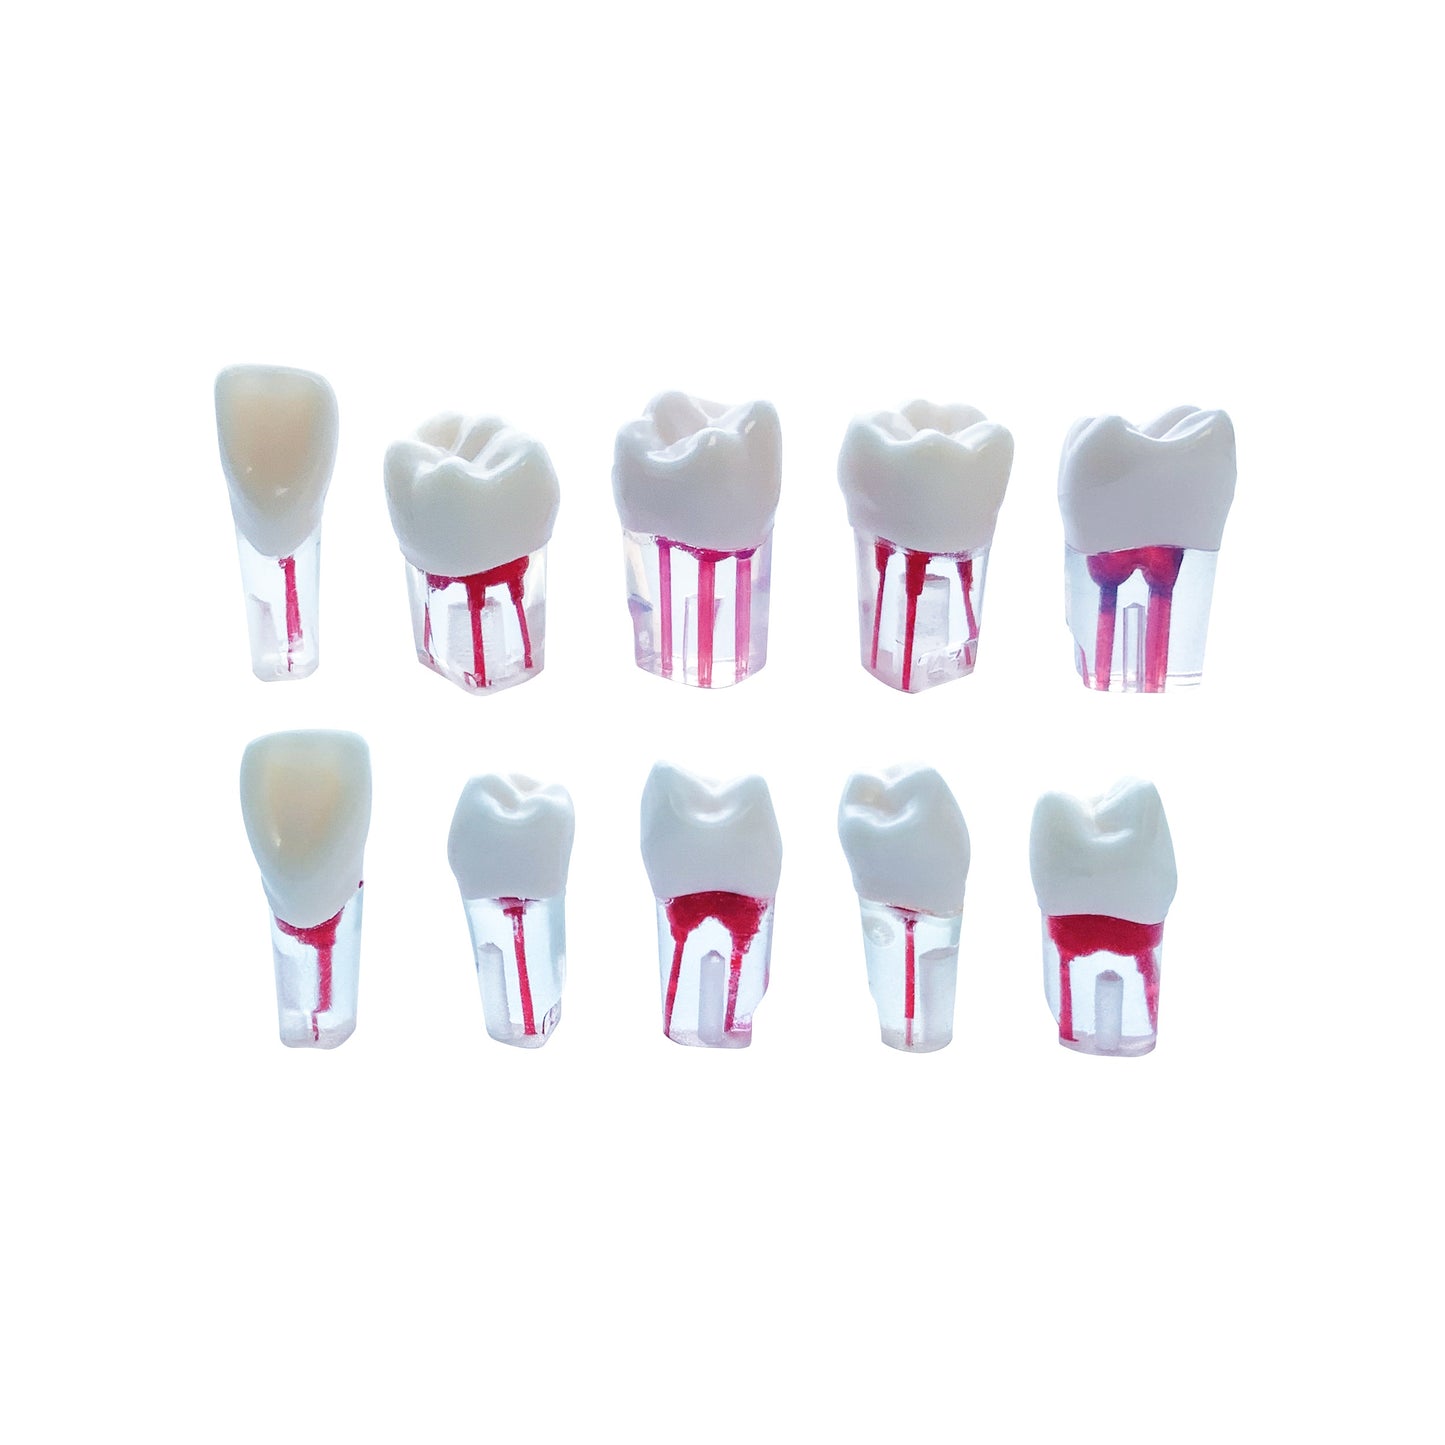 Kilgore Nissin Dental 200 Type 28 Teeth RCT (Endo Root Canal Practice Typodont Teeth Model)